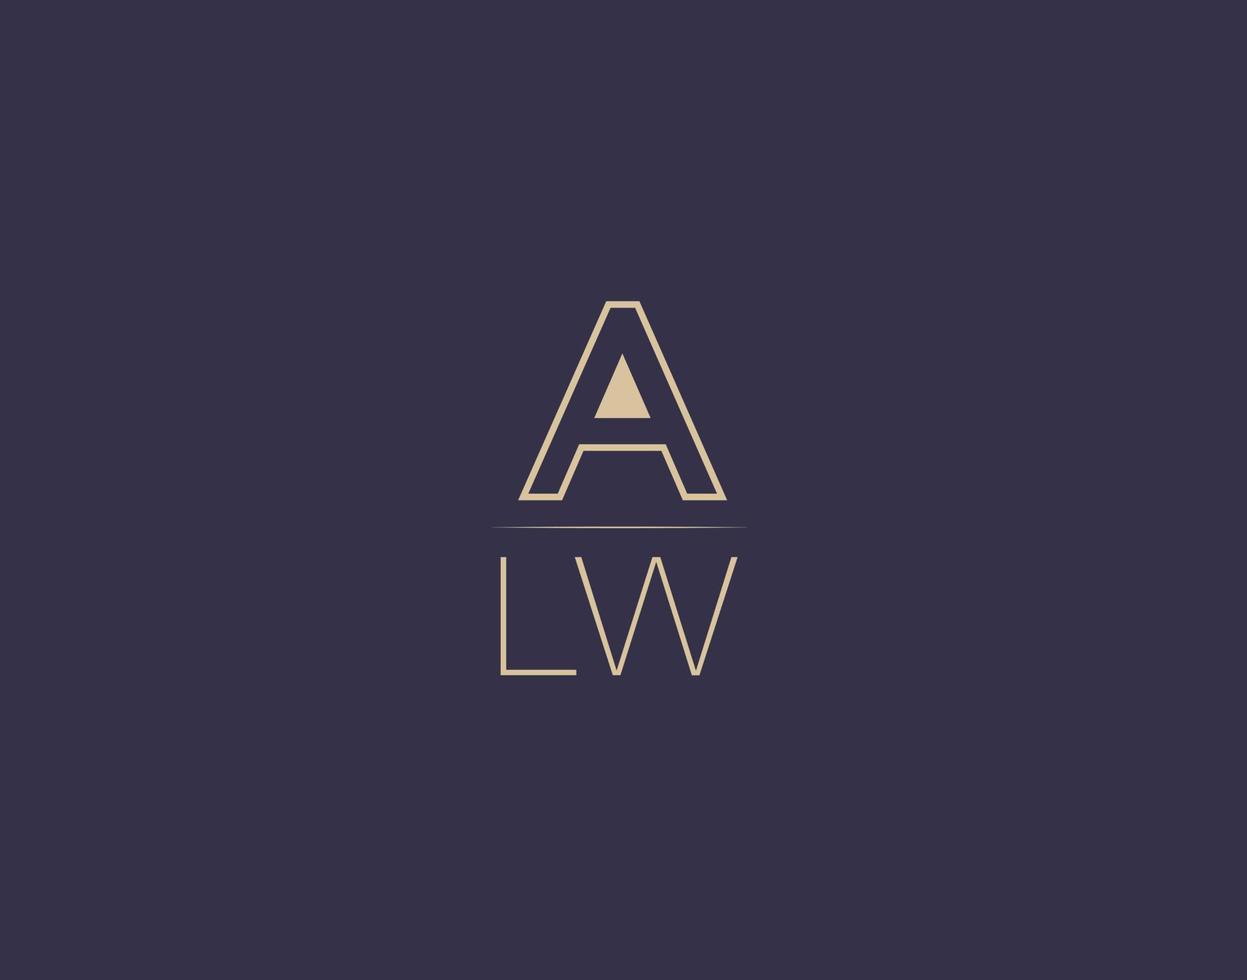 alw letter logo design moderno minimalista vector imágenes